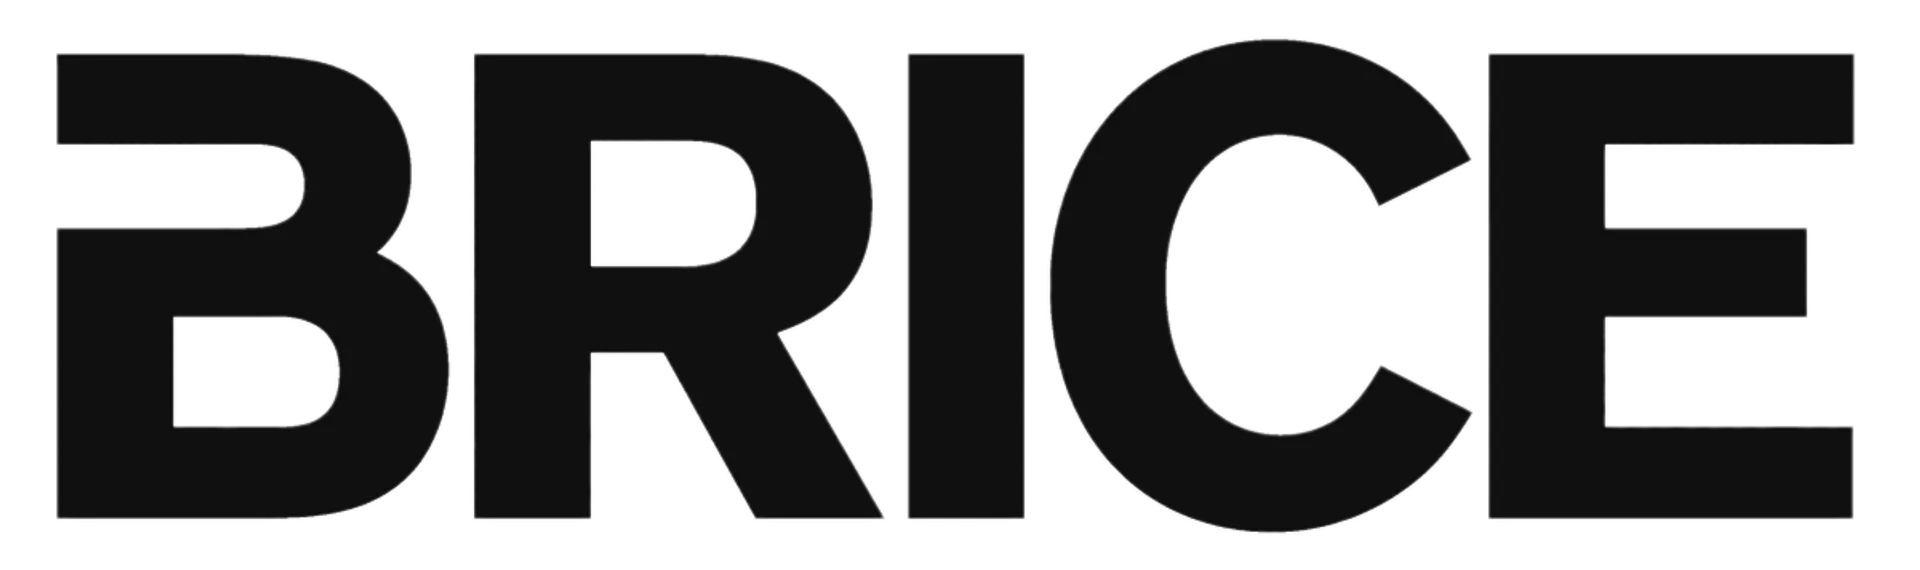 BRICE logo